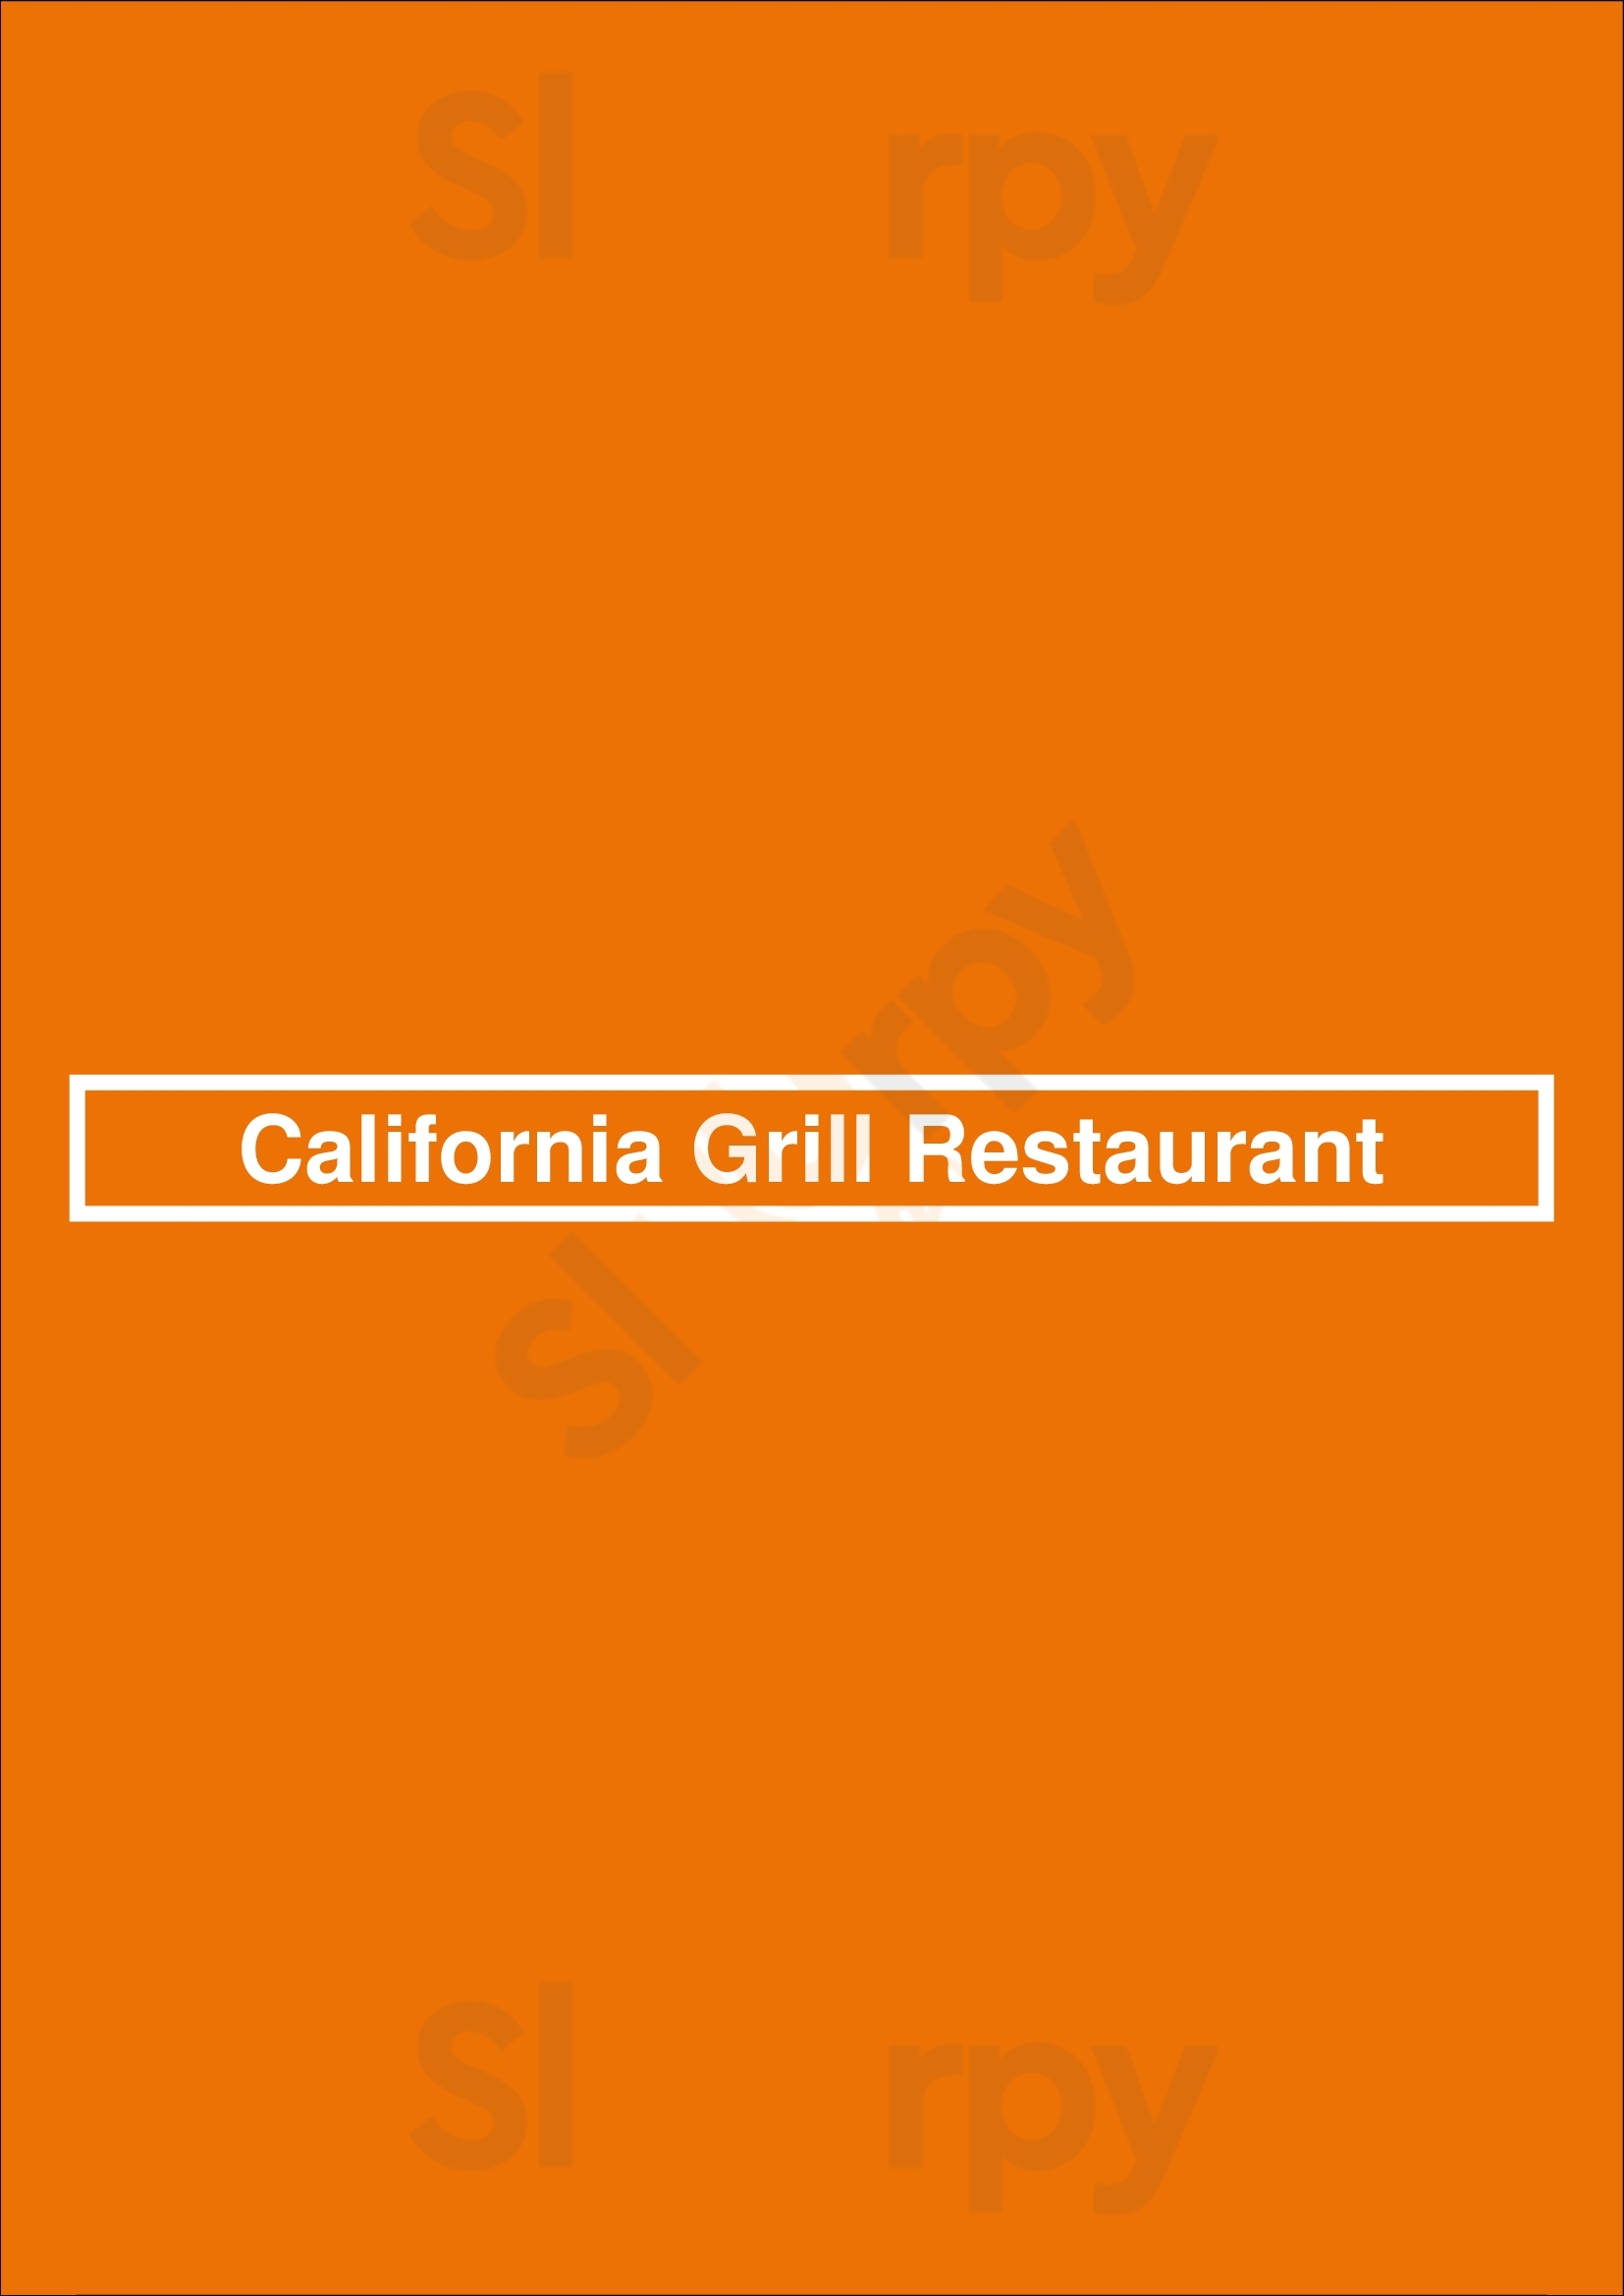 California Grill Restaurant Los Angeles Menu - 1